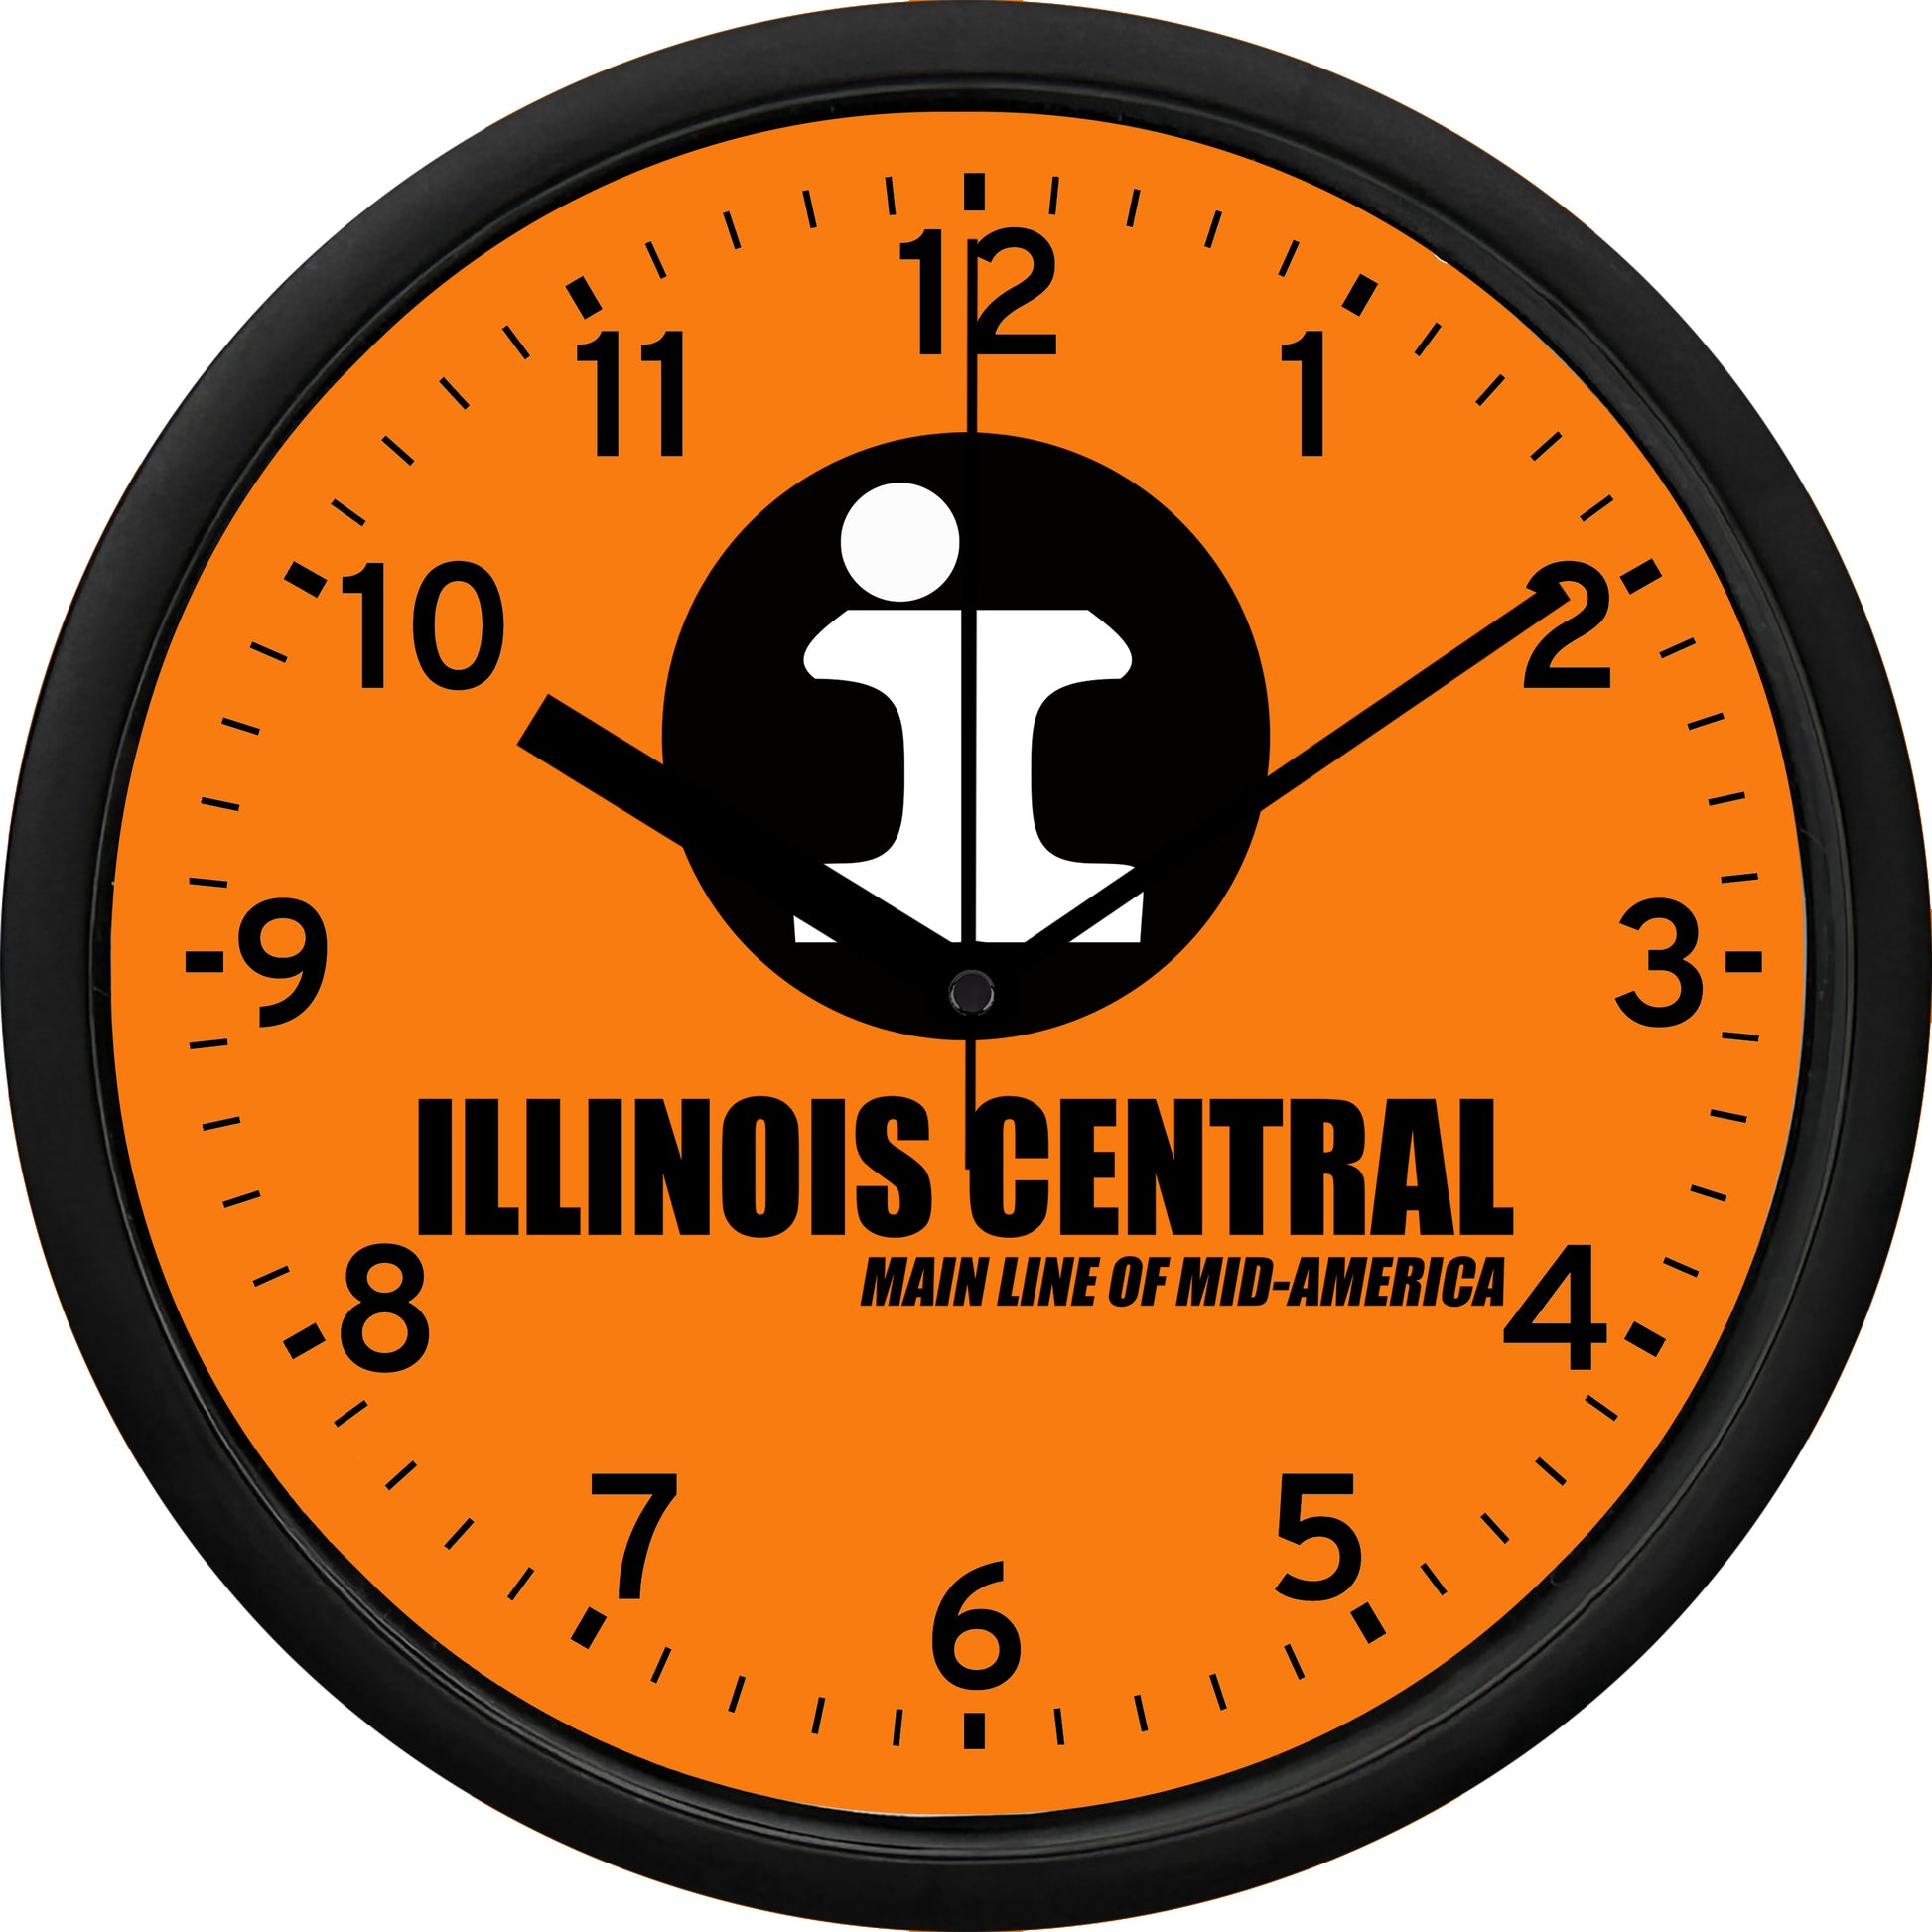 Illinois Central Railroad "Main Line of Mid-America" Wall Clock